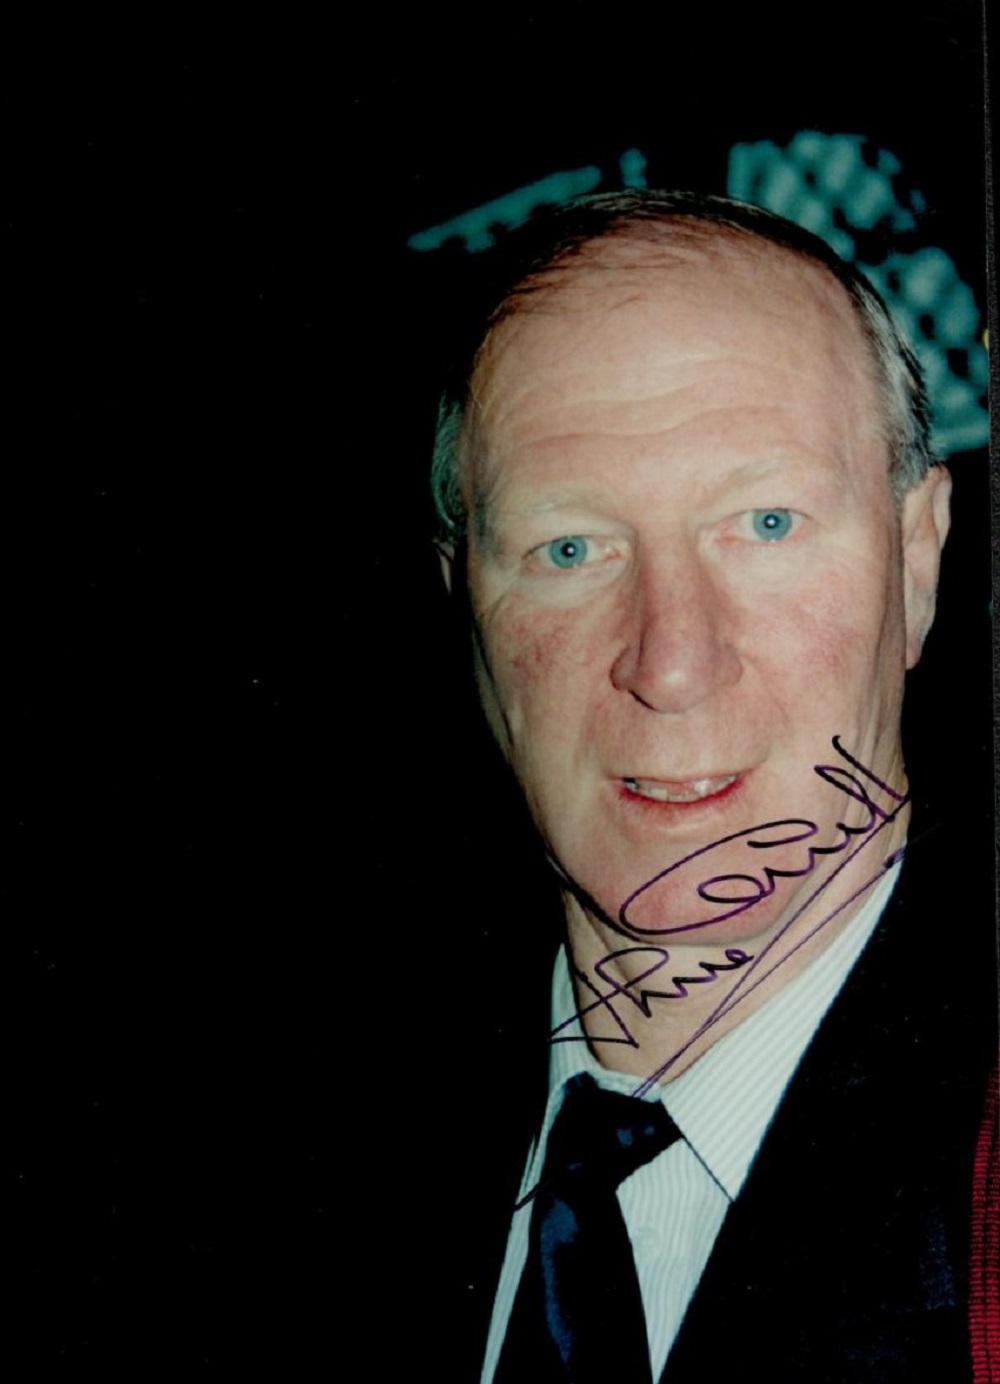 Jack Charlton signed 8x6 colour photo. John Charlton OBE DL (8 May 1935 - 10 July 2020) was an